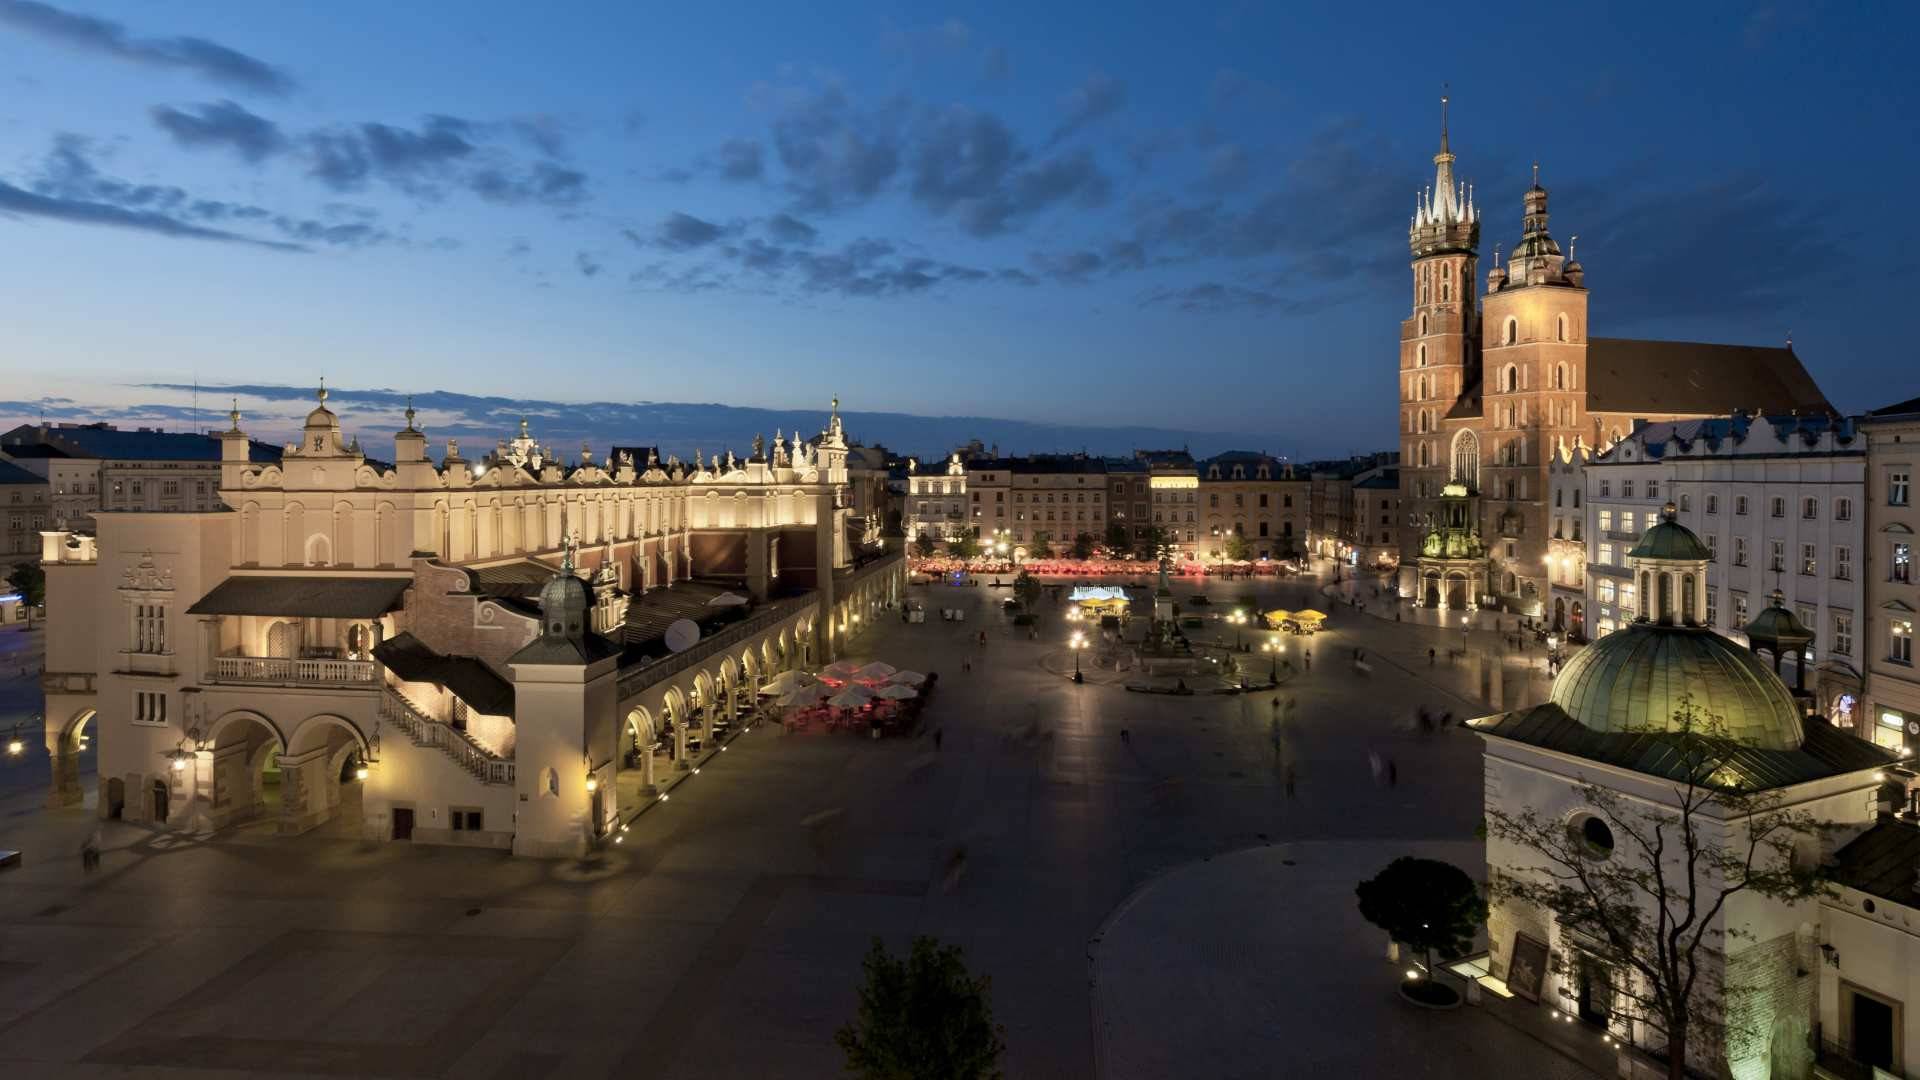 La plaza del Mercado, Rynek Glowny, la mayor plaza medieval de Europa. 